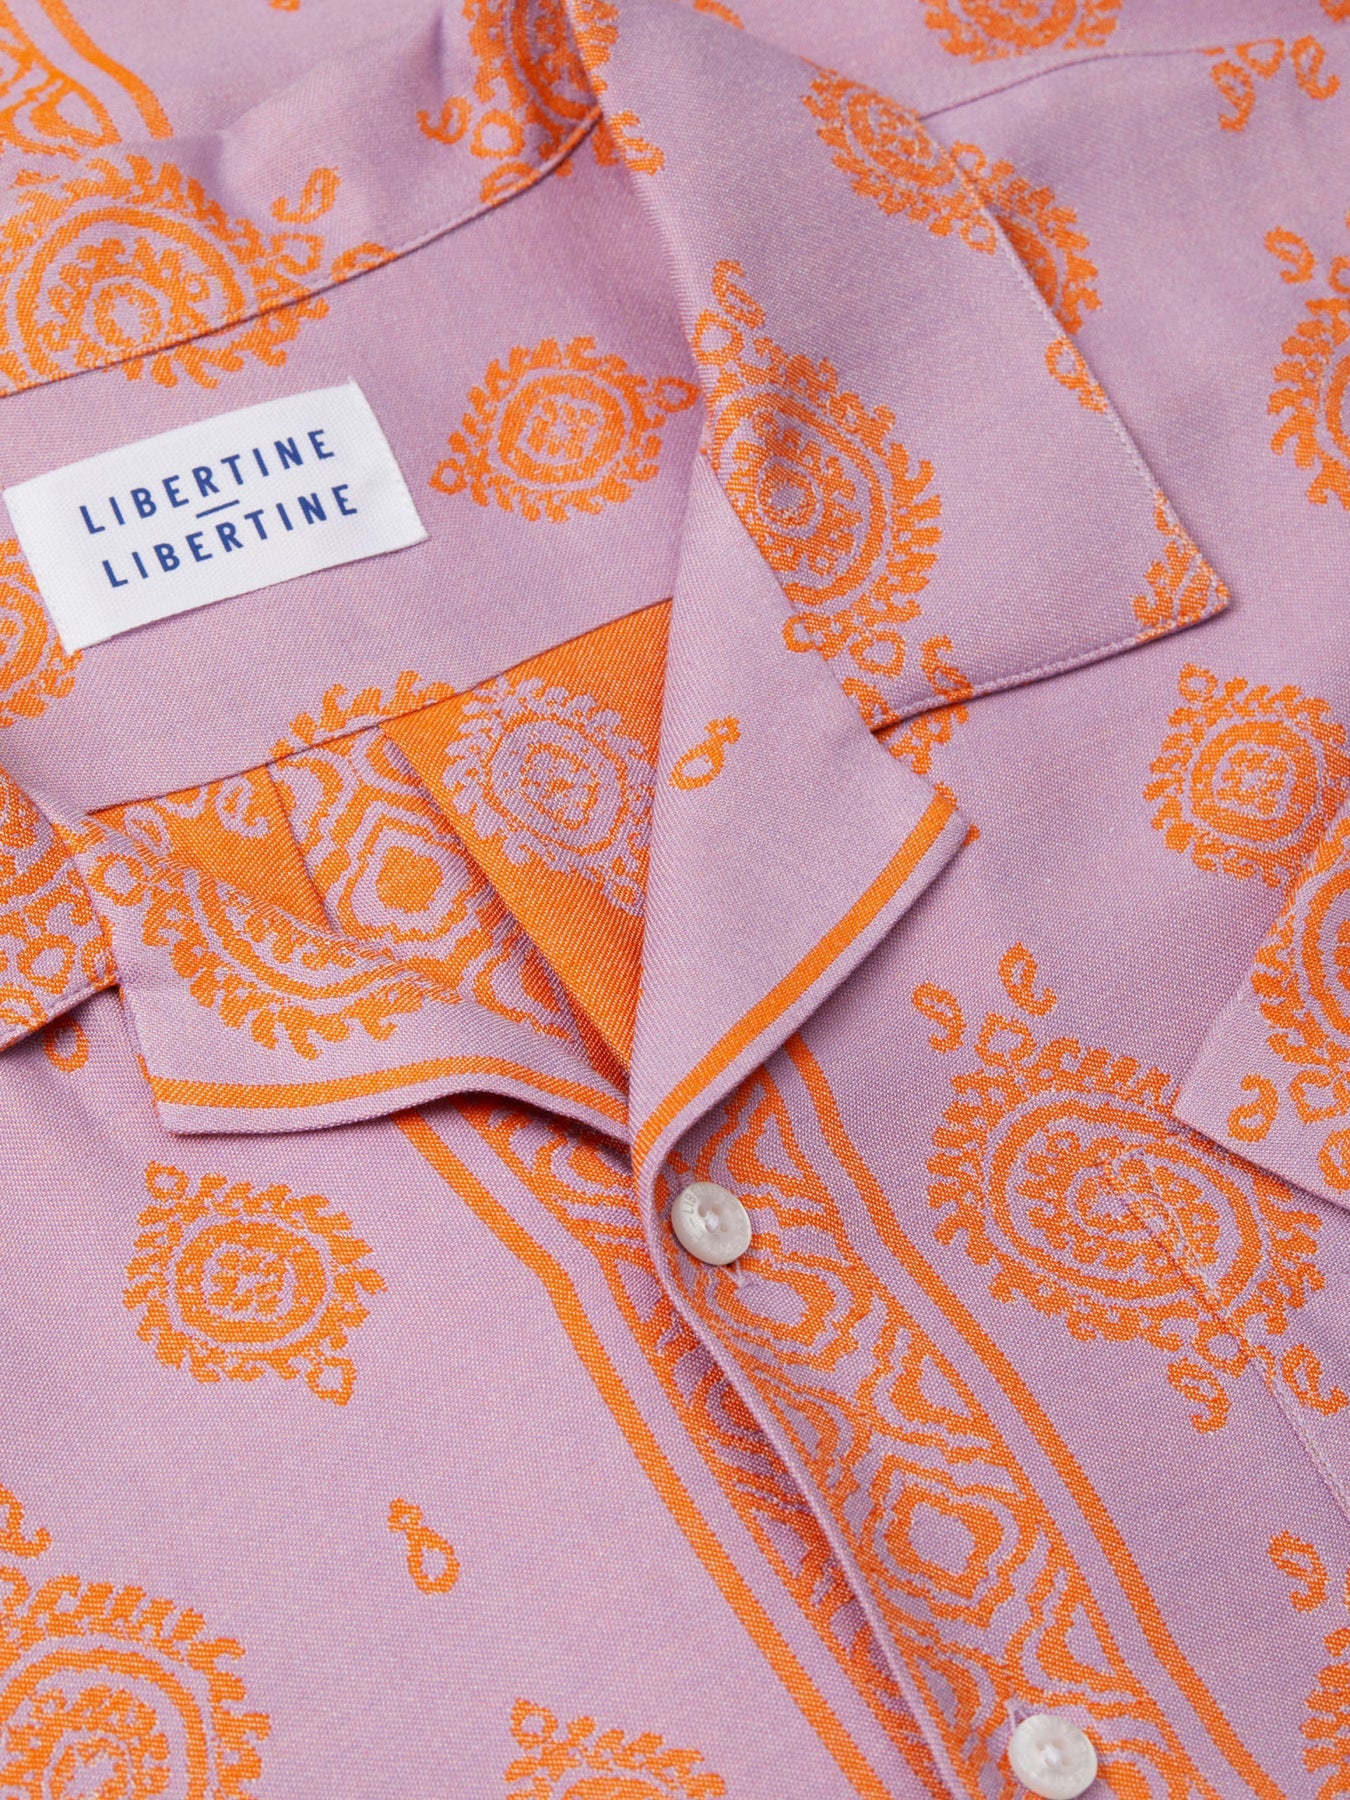 libertine libertine_cave shirt_lavender_3_5